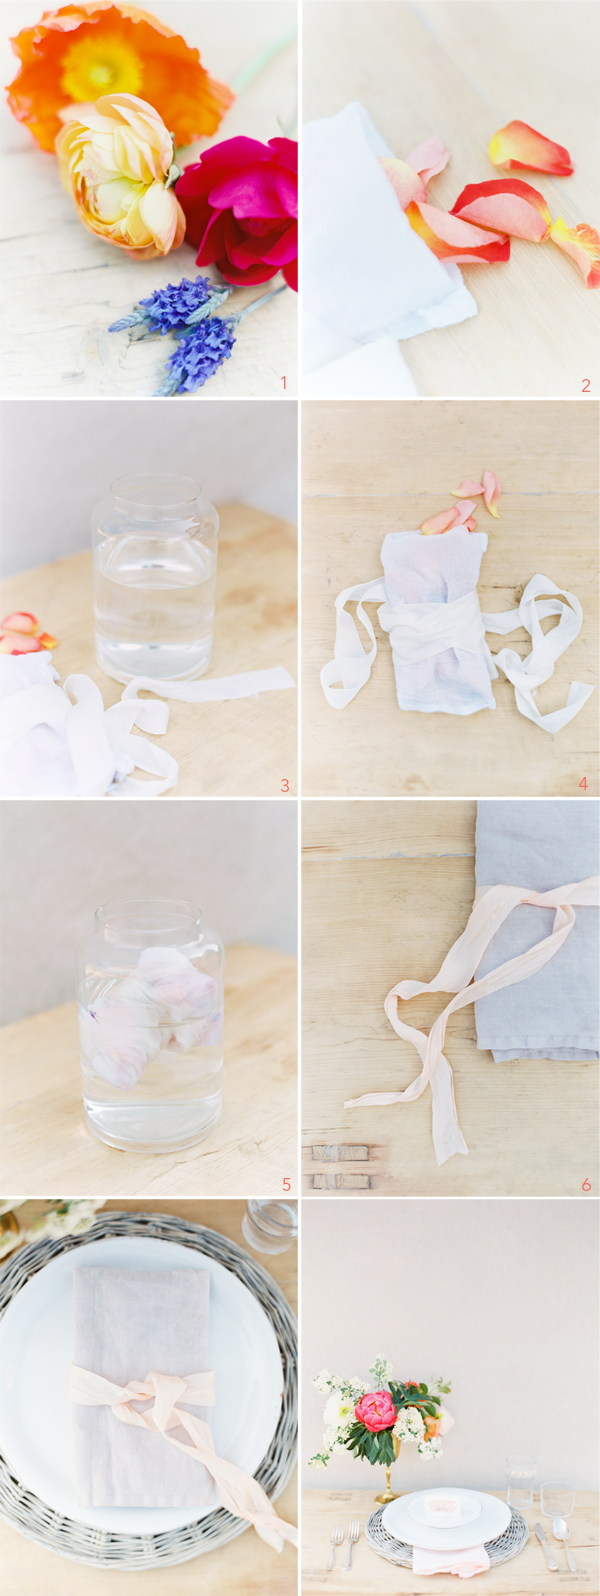 diy-dyed-ribbon-and-napkin-wedding-ideas